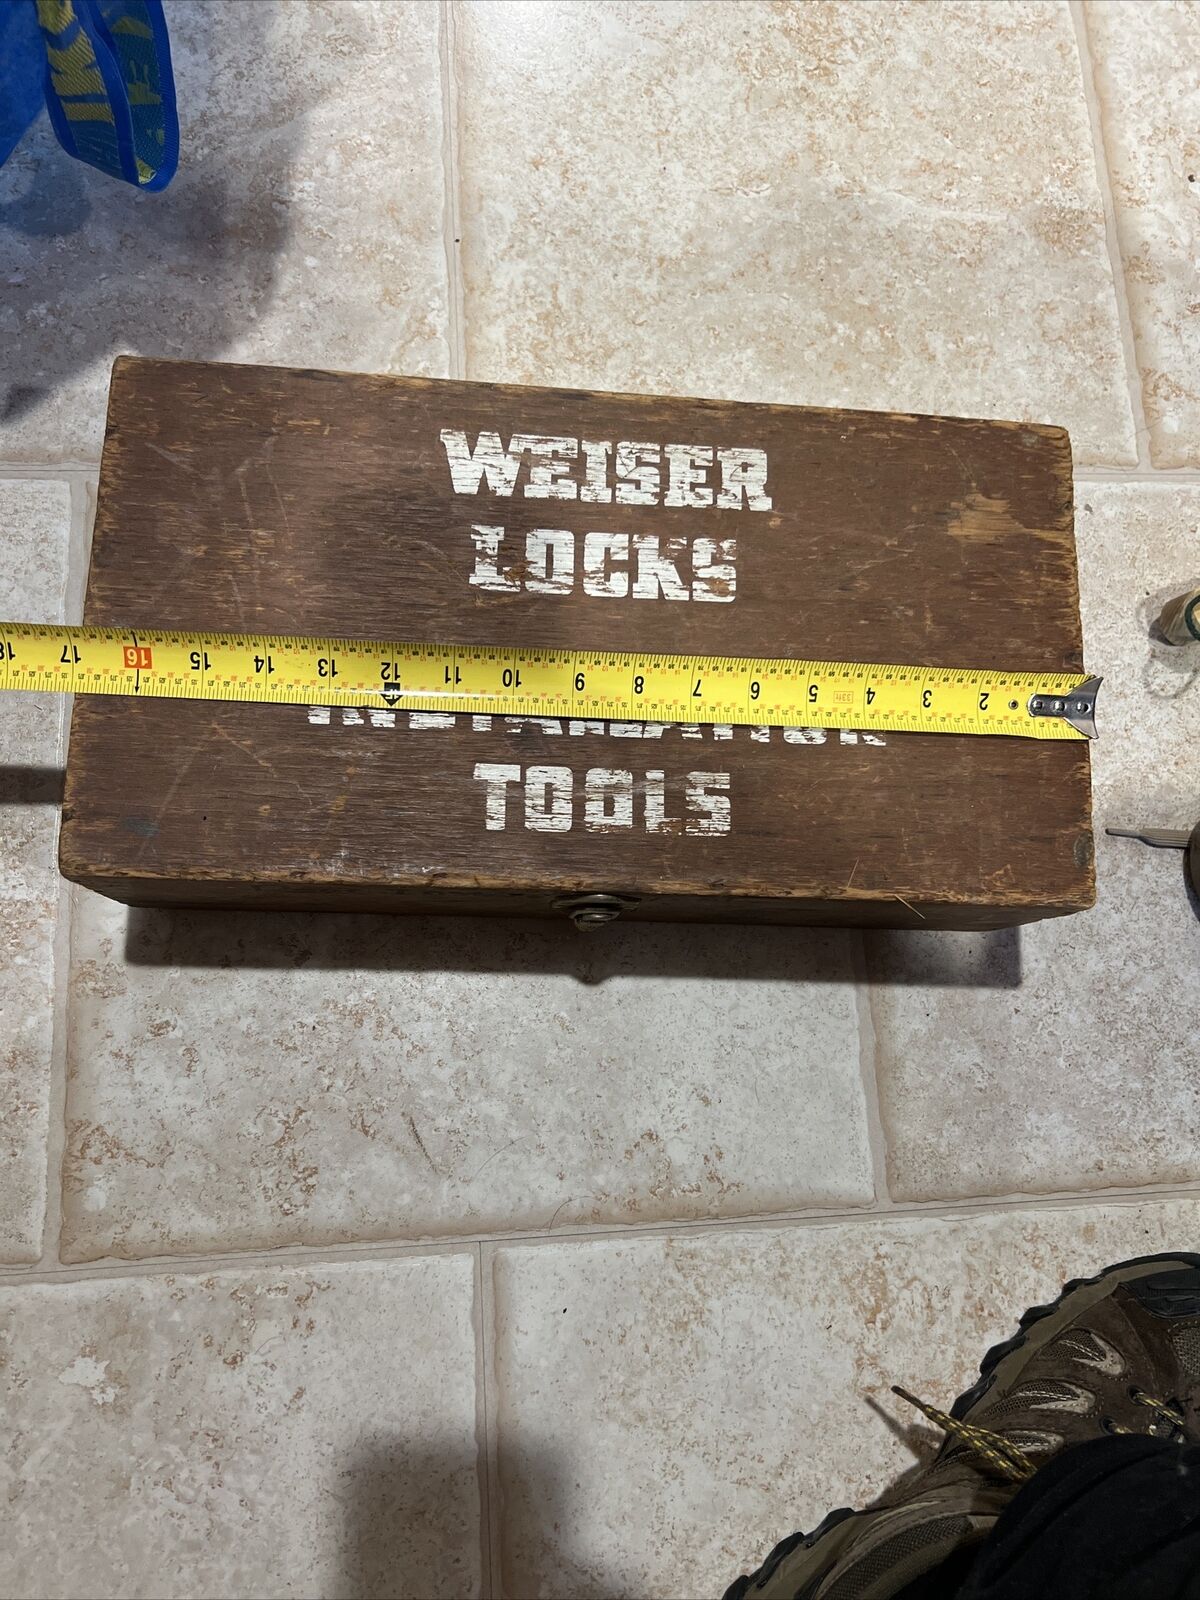 Weiser Locks Installation Tools